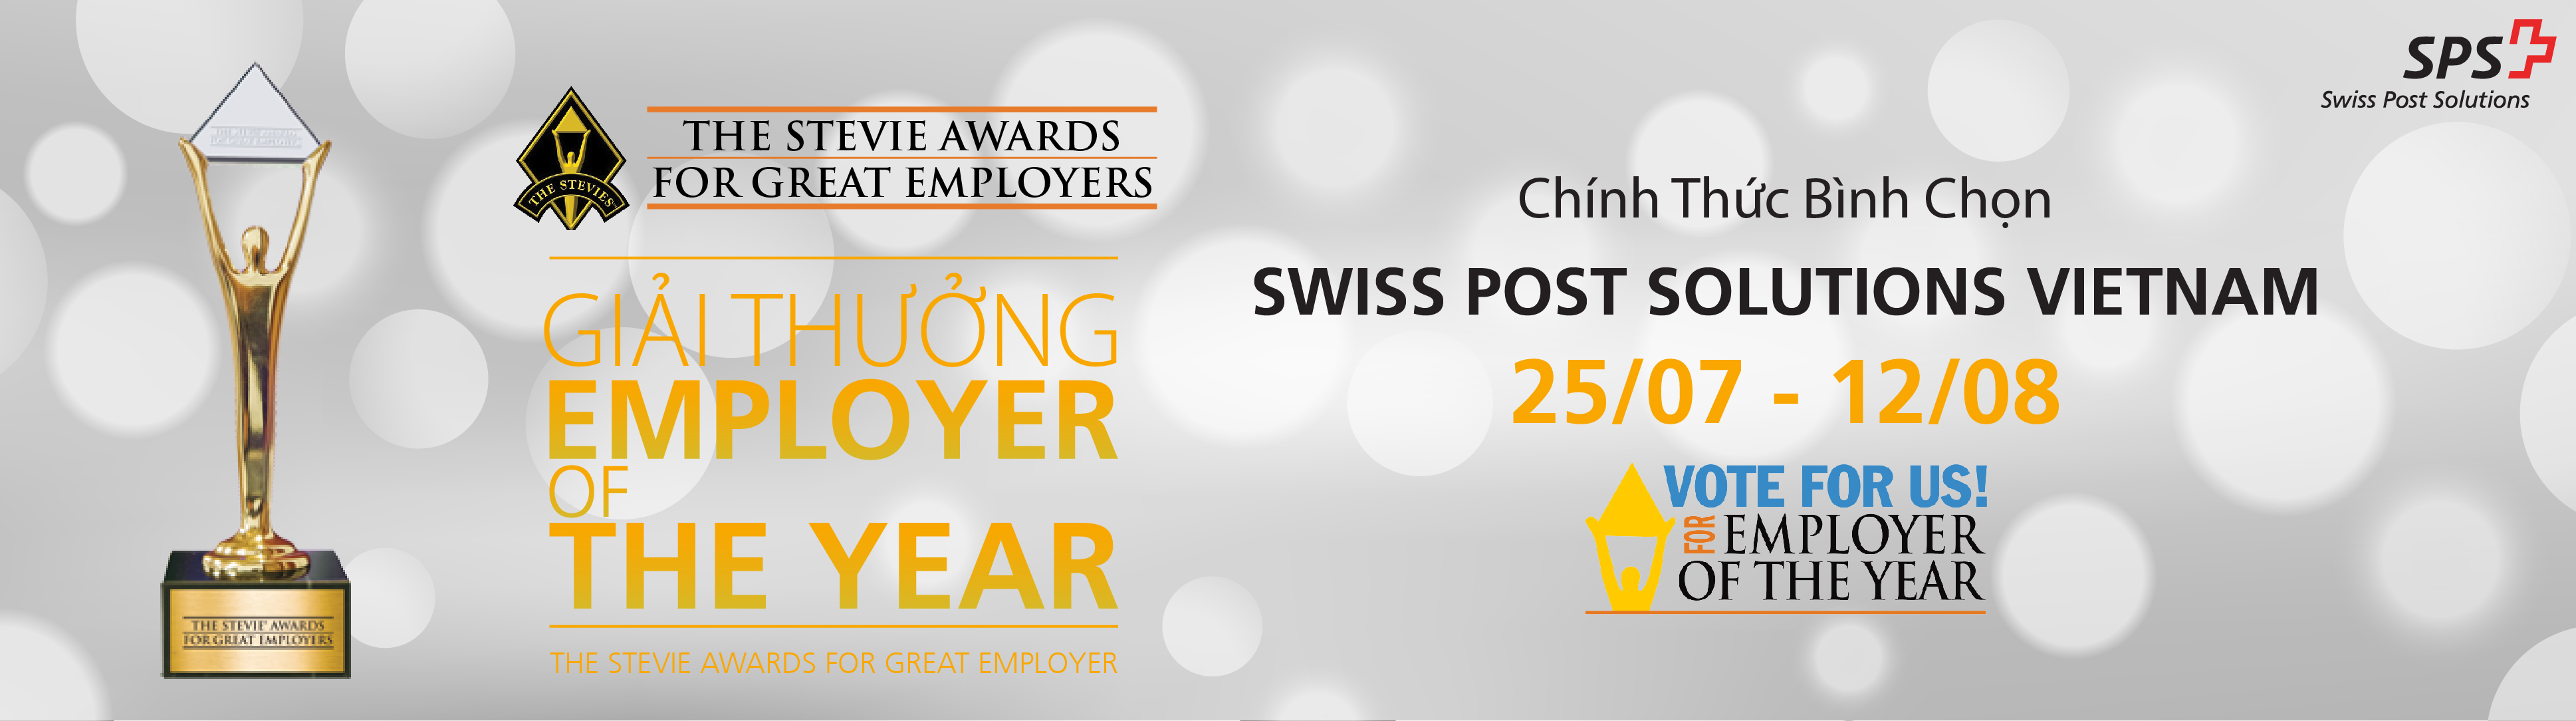 Mời Tham Gia Bình Chọn Cho Swiss Post Solutions Vietnam Giải thưởng The Stevie Awards for Great Employers